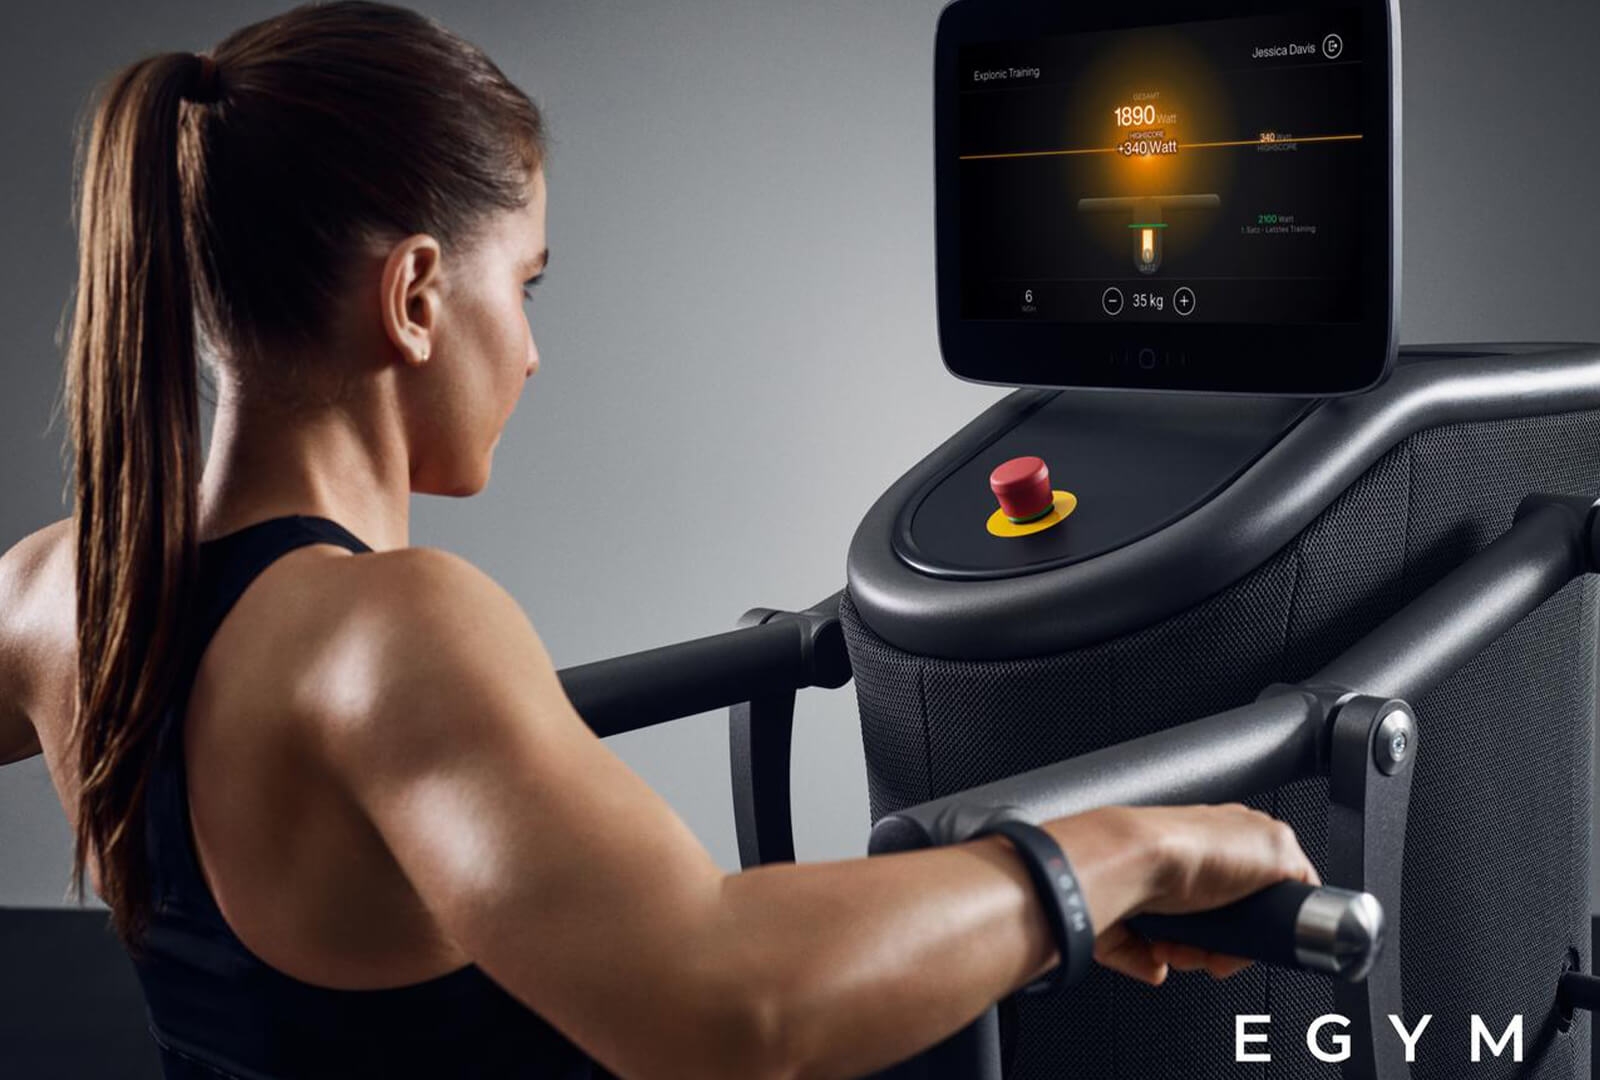 EGYM bietet innovative Fitnesslösungen